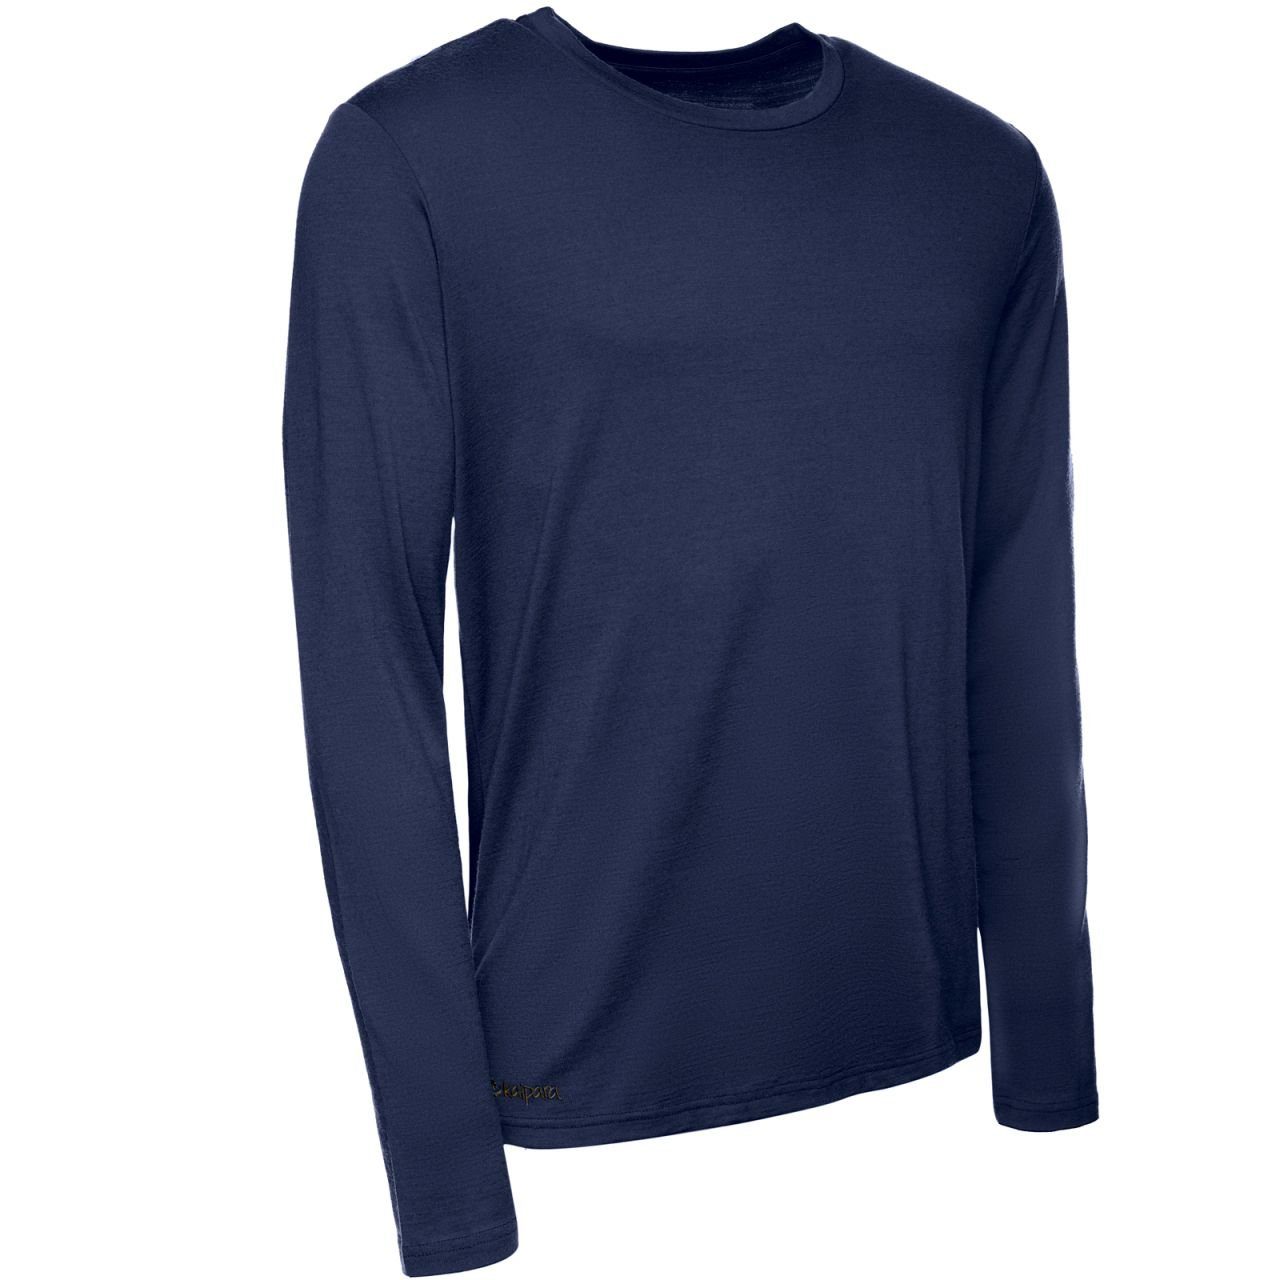 Kaipara - Merino 200g aus Germany warm Herren-Unterhemd reiner (1-St) Blau Merinowolle Sportswear Unterhemd in Regularfit Merino Made